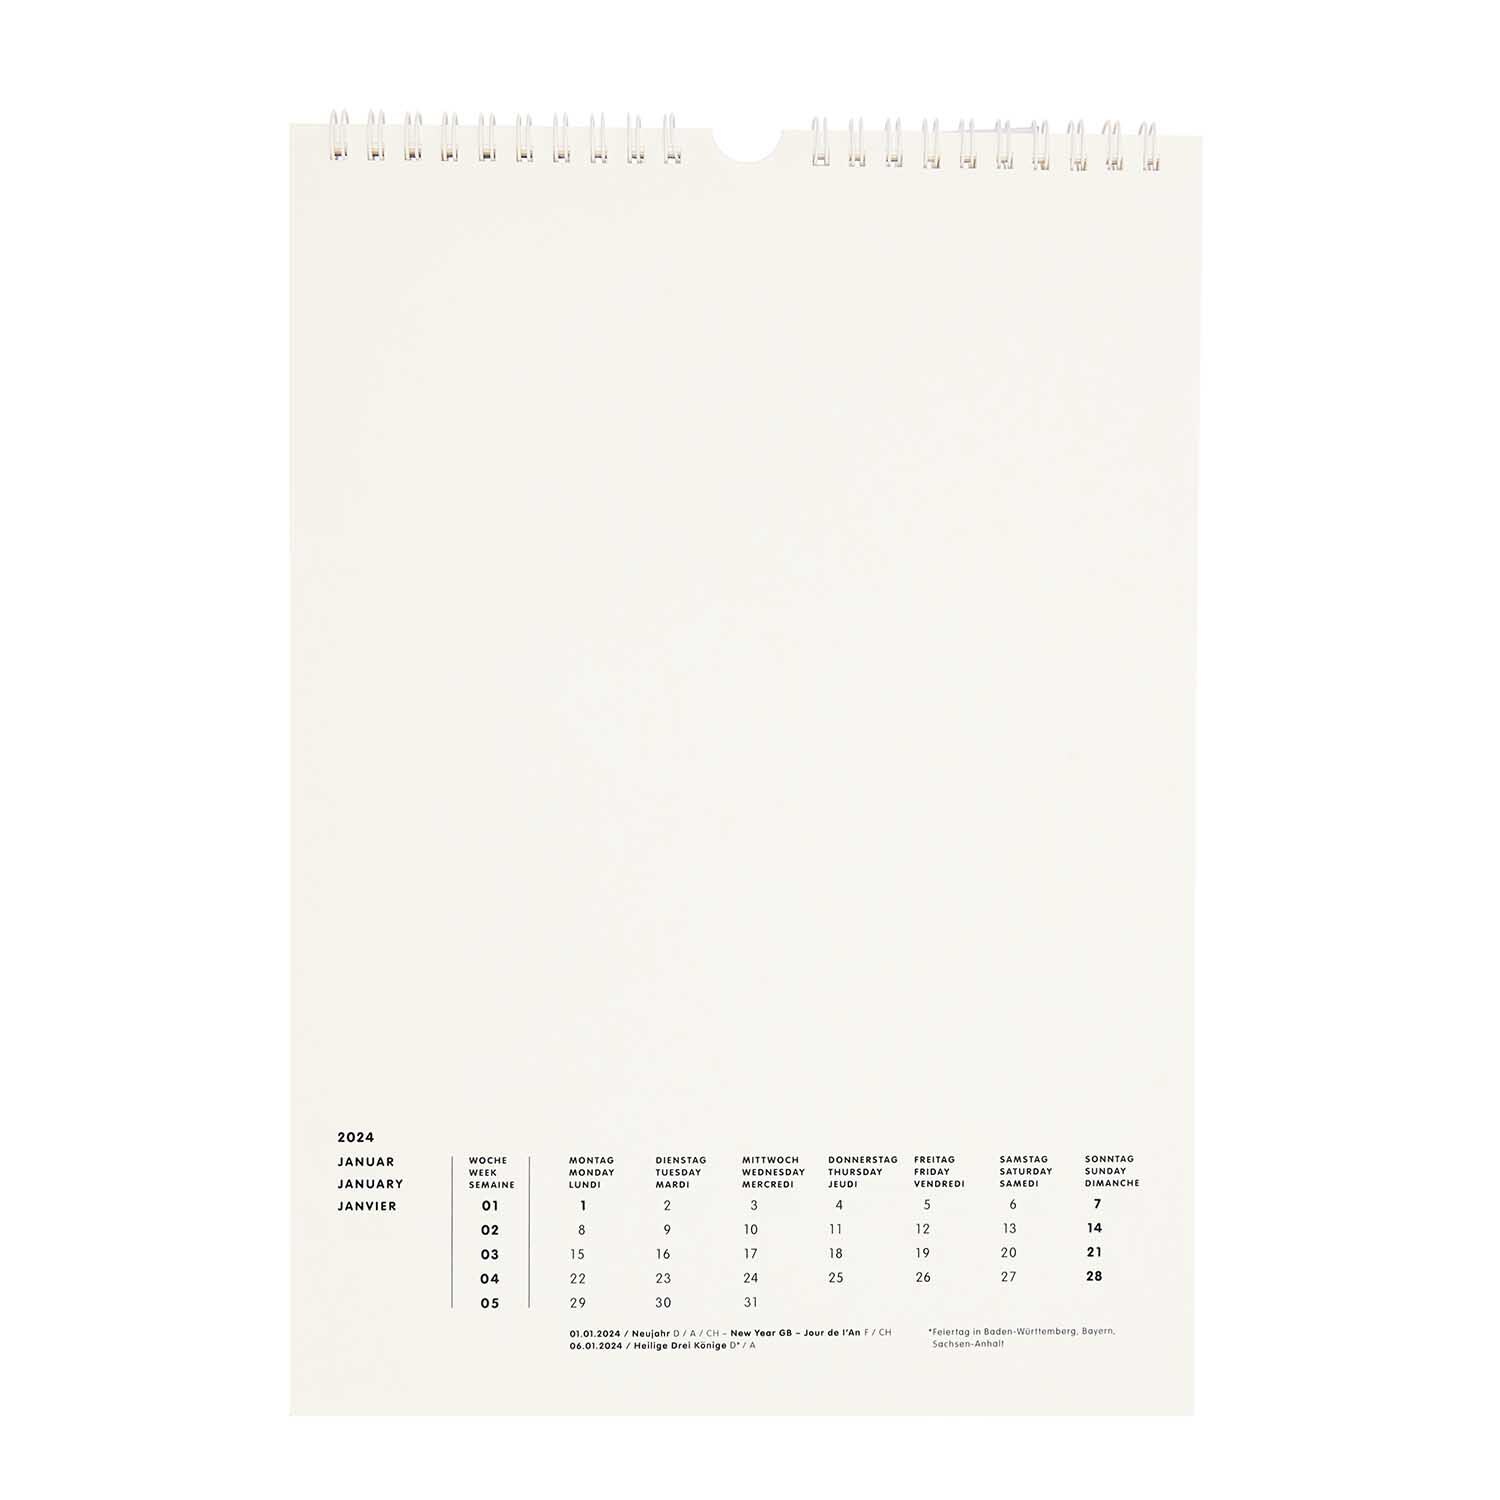 Paper Poetry Kalender 2024 DIN A4 creme